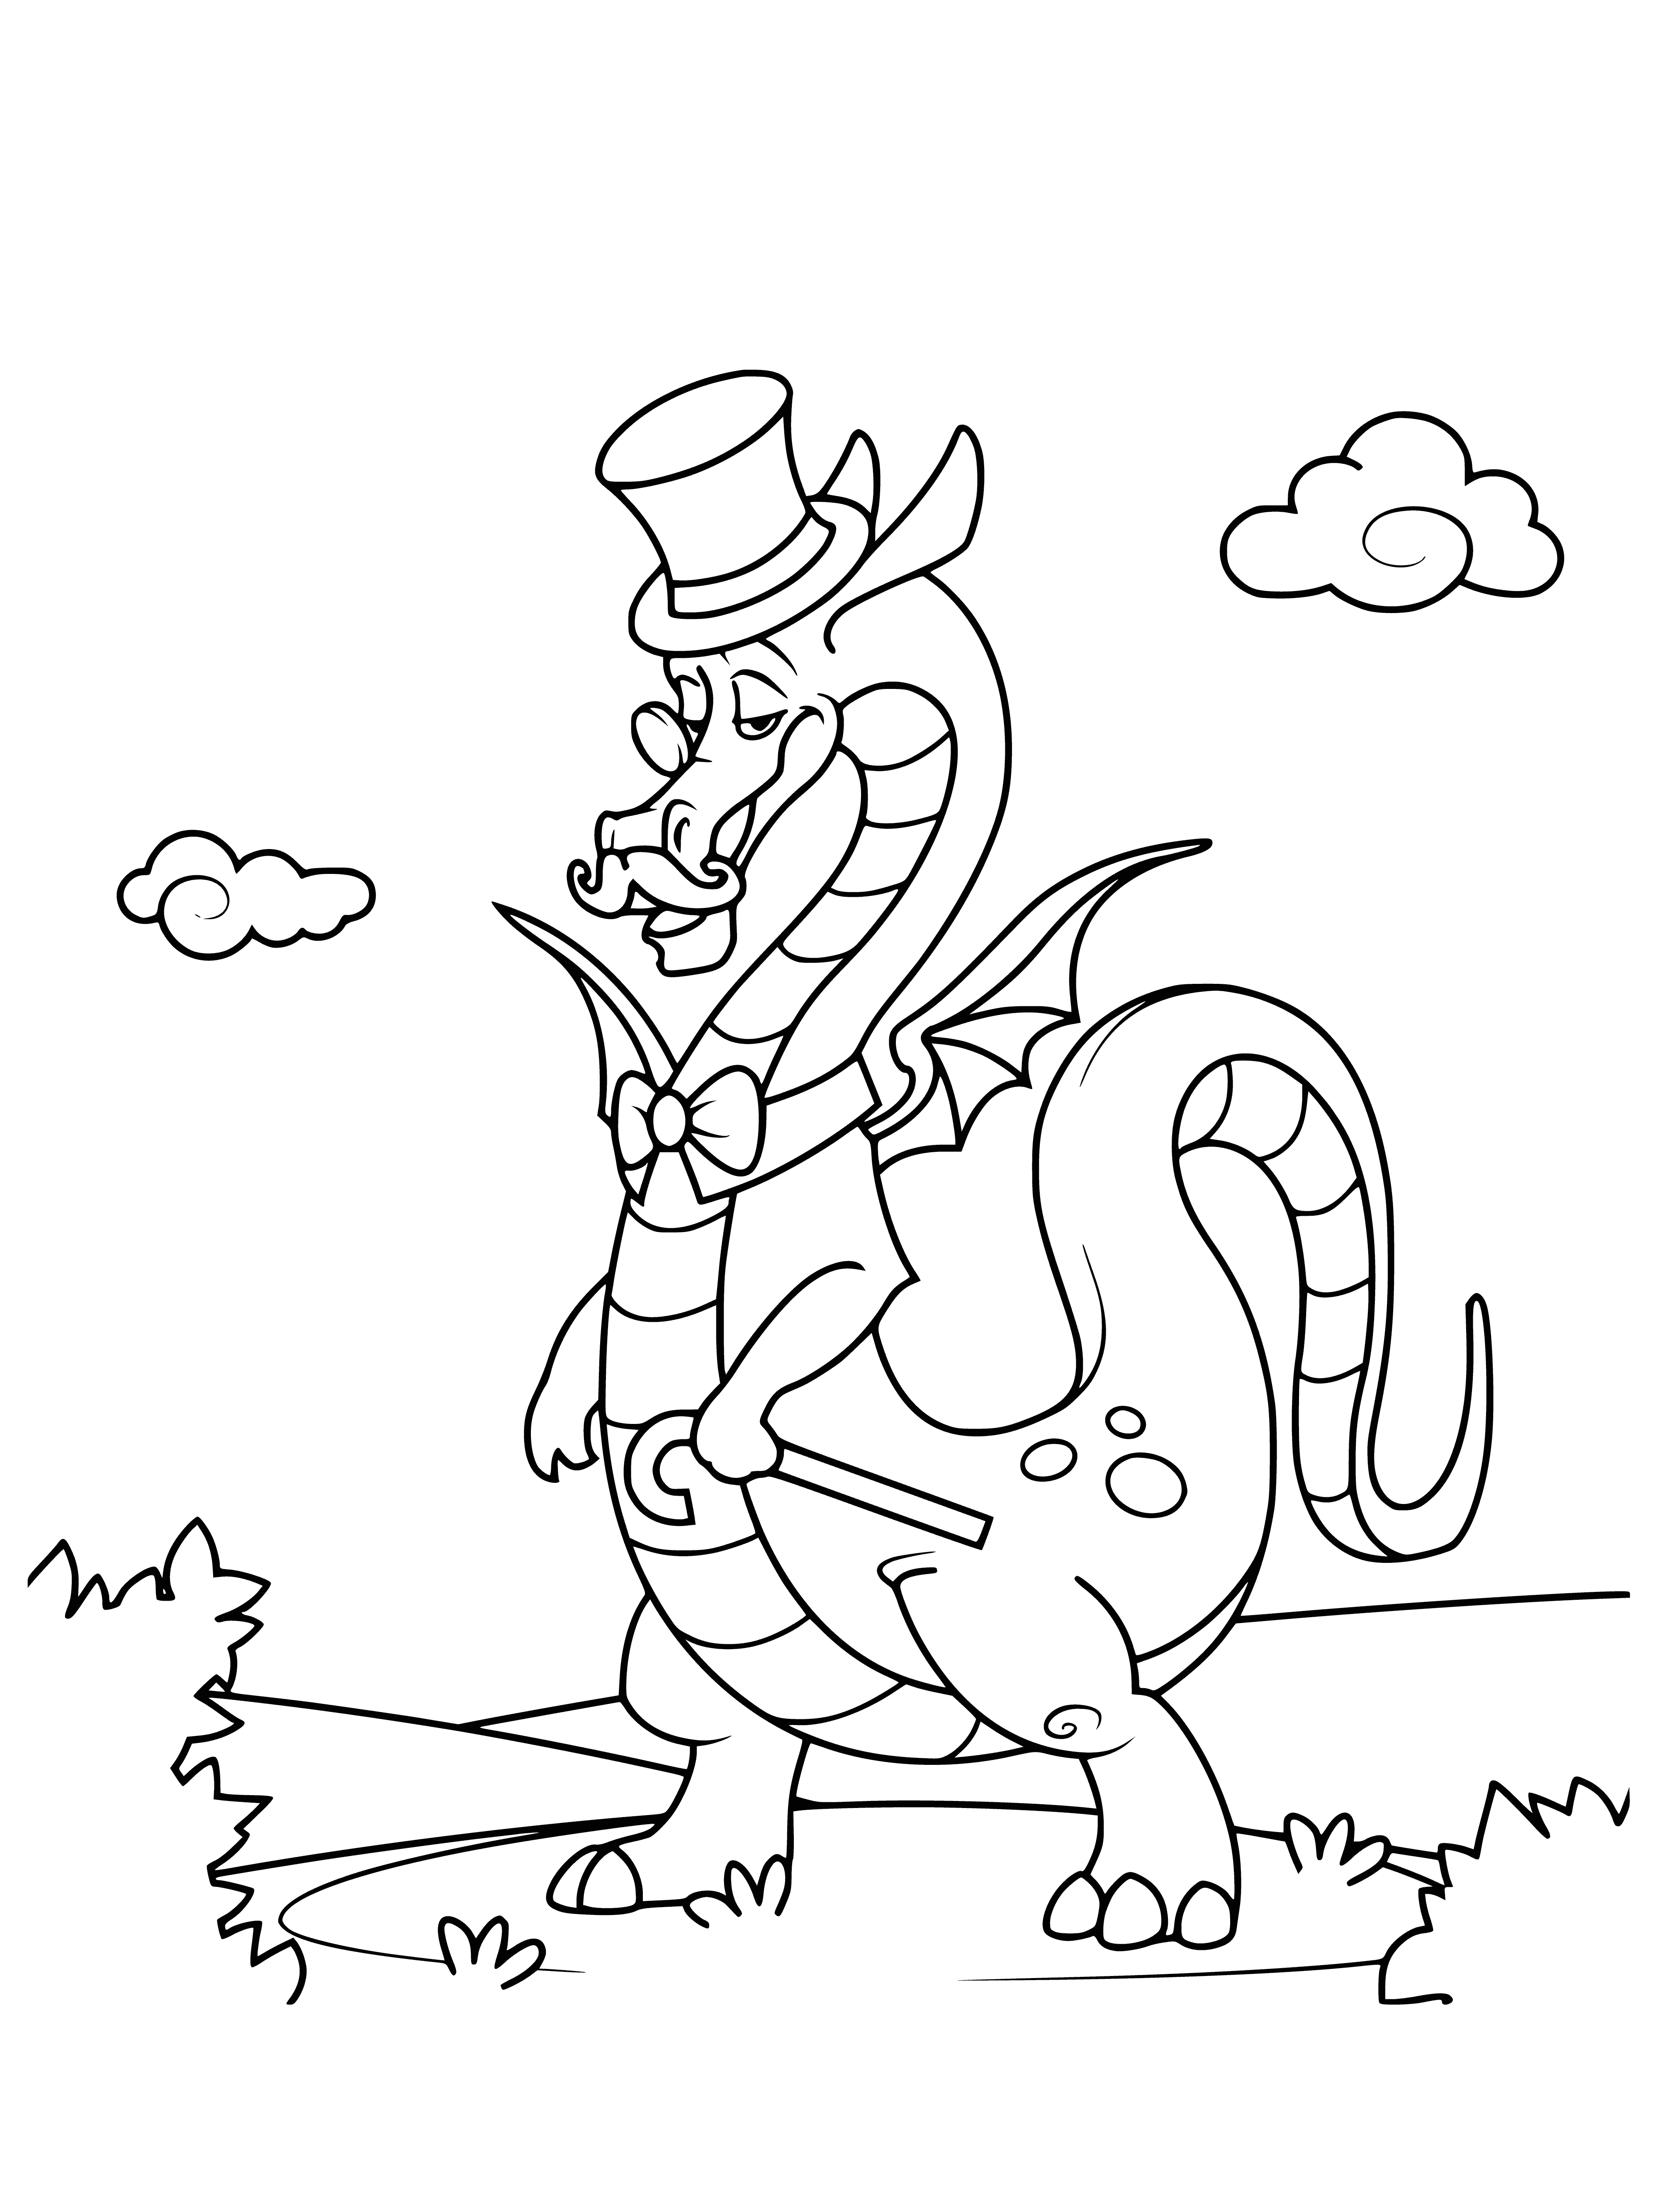 Dragon gentleman coloring page